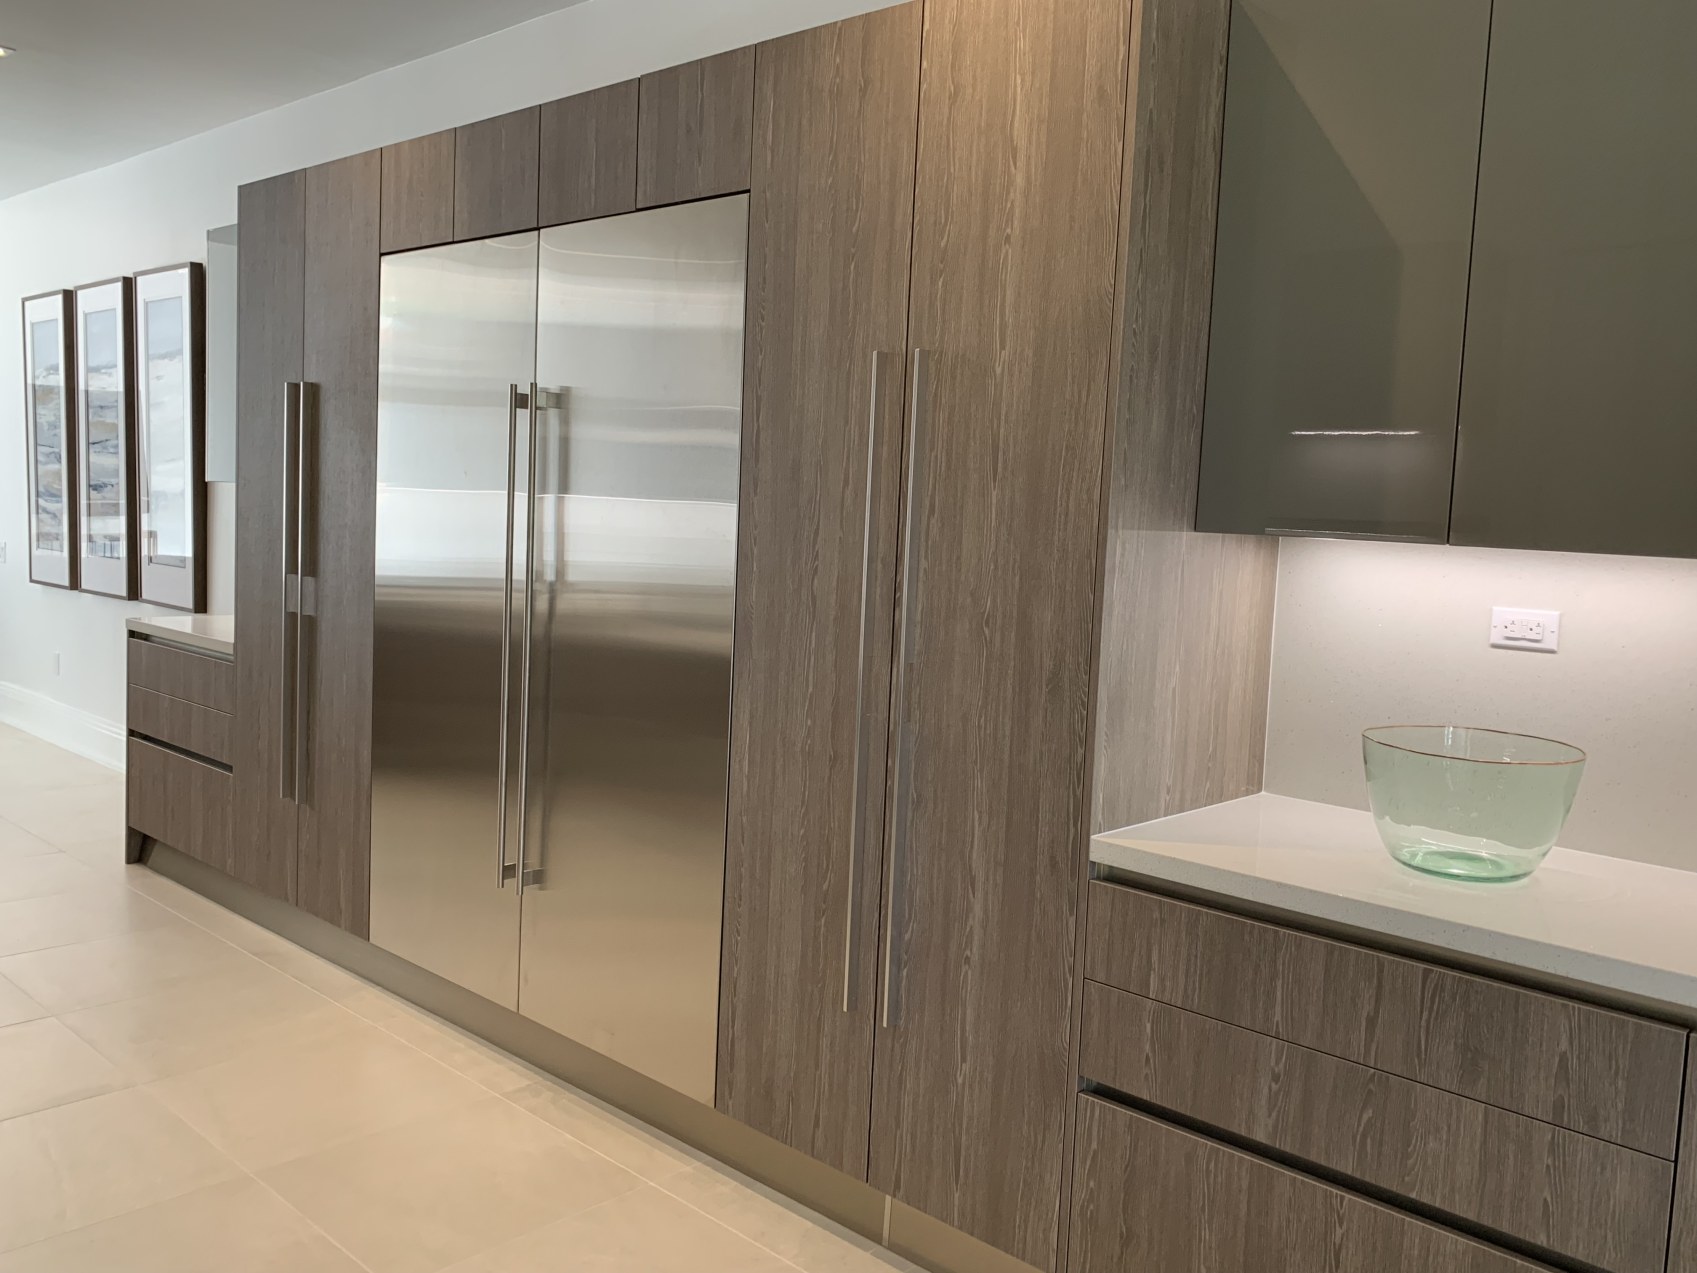 Wood grain & high-gloss kitchen cabinets with Sub-Zero refrigerator